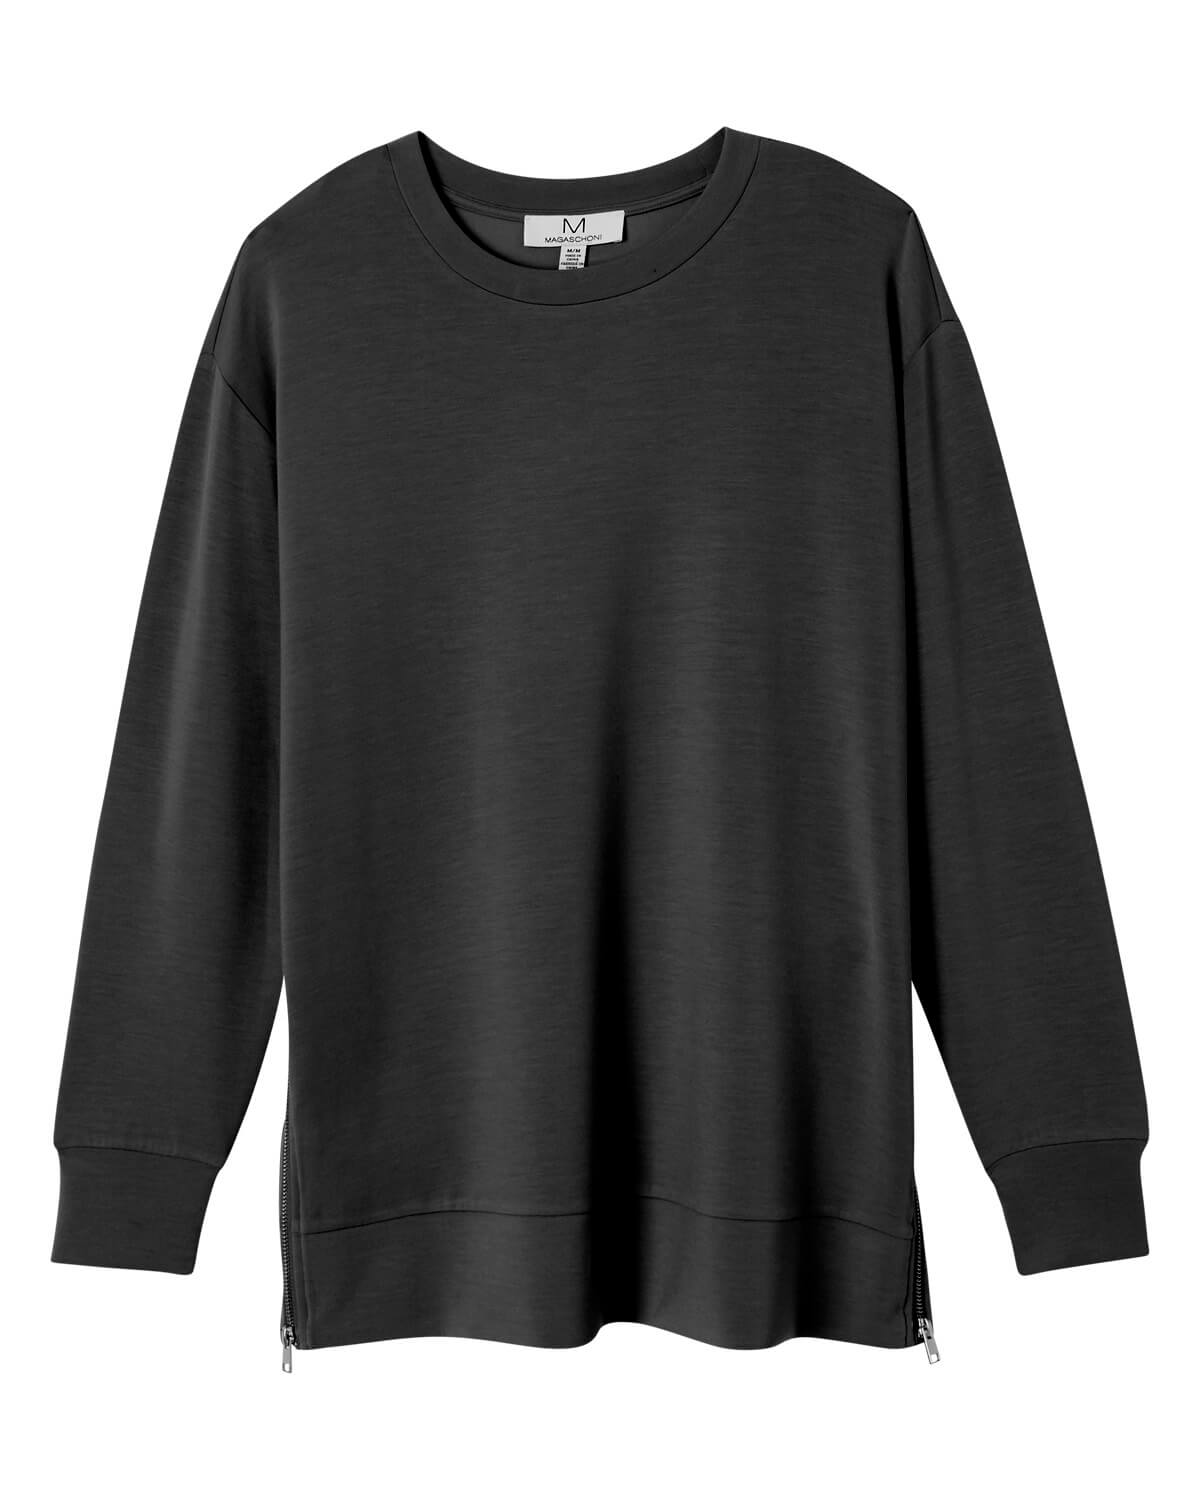 Shop Tunic Length Side Slit Pullover Top | M Magaschoni | JANE + MERCER